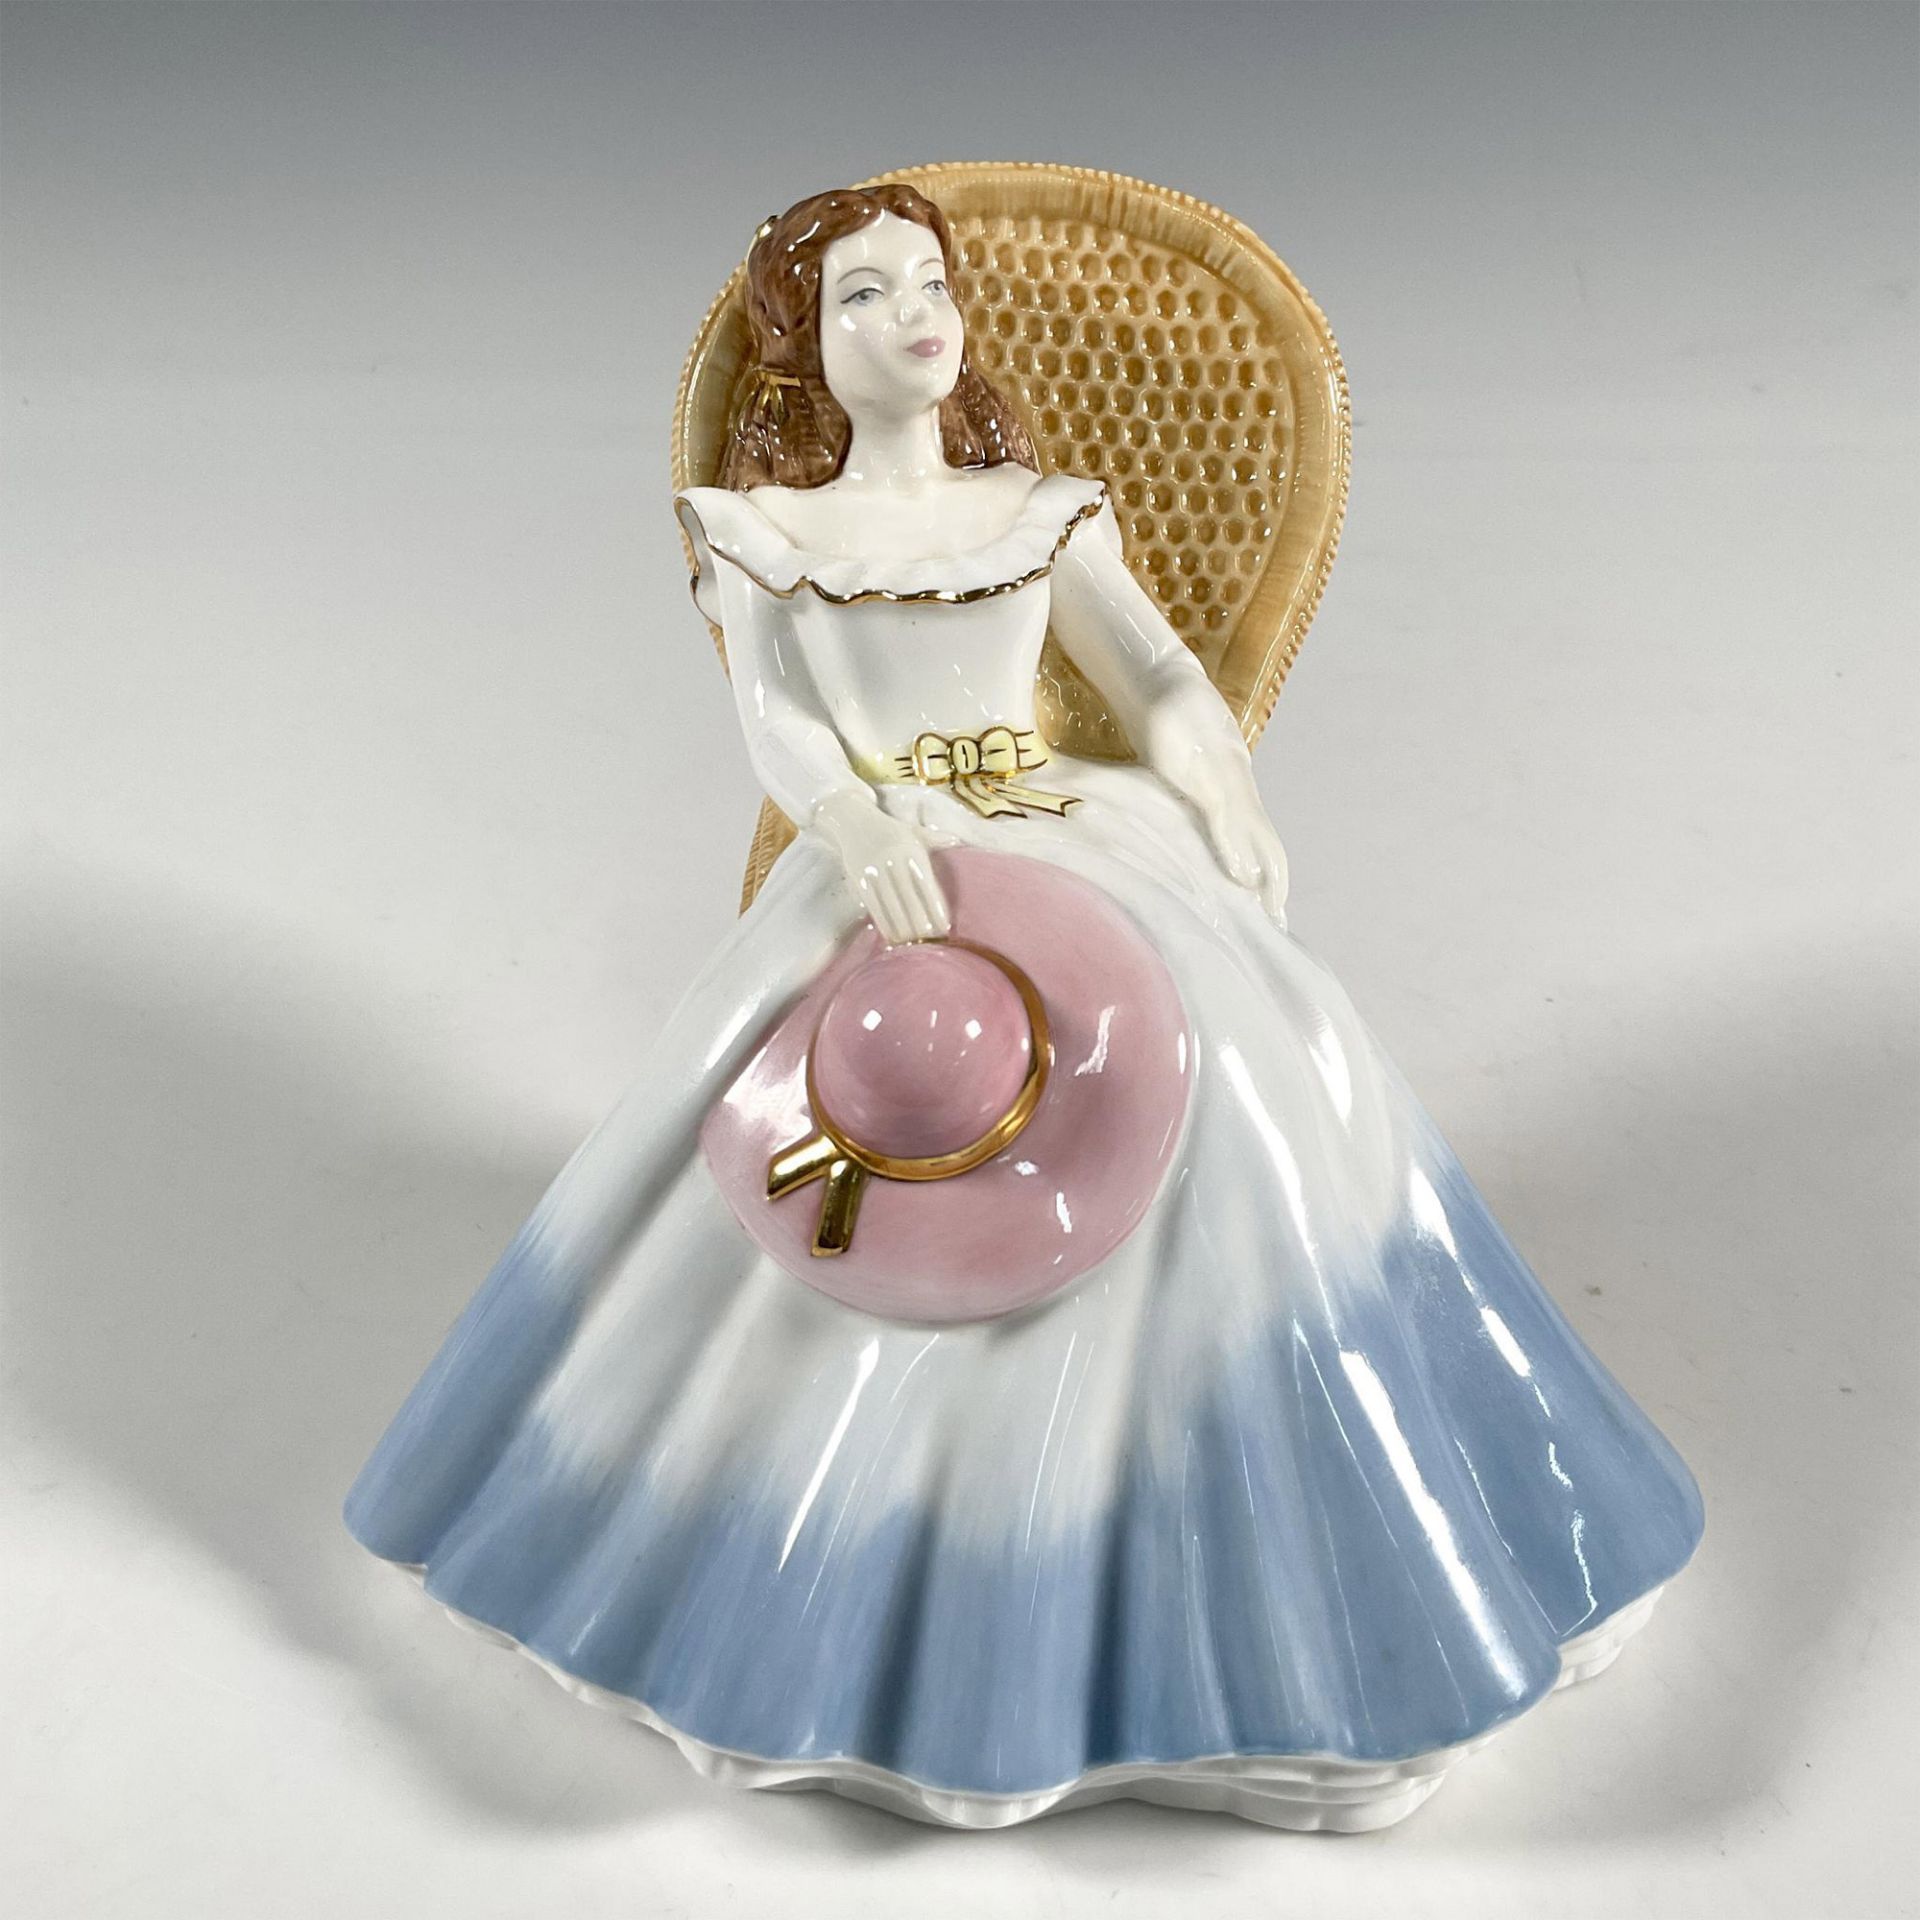 Annabel - HN4874 - Royal Doulton Figurine